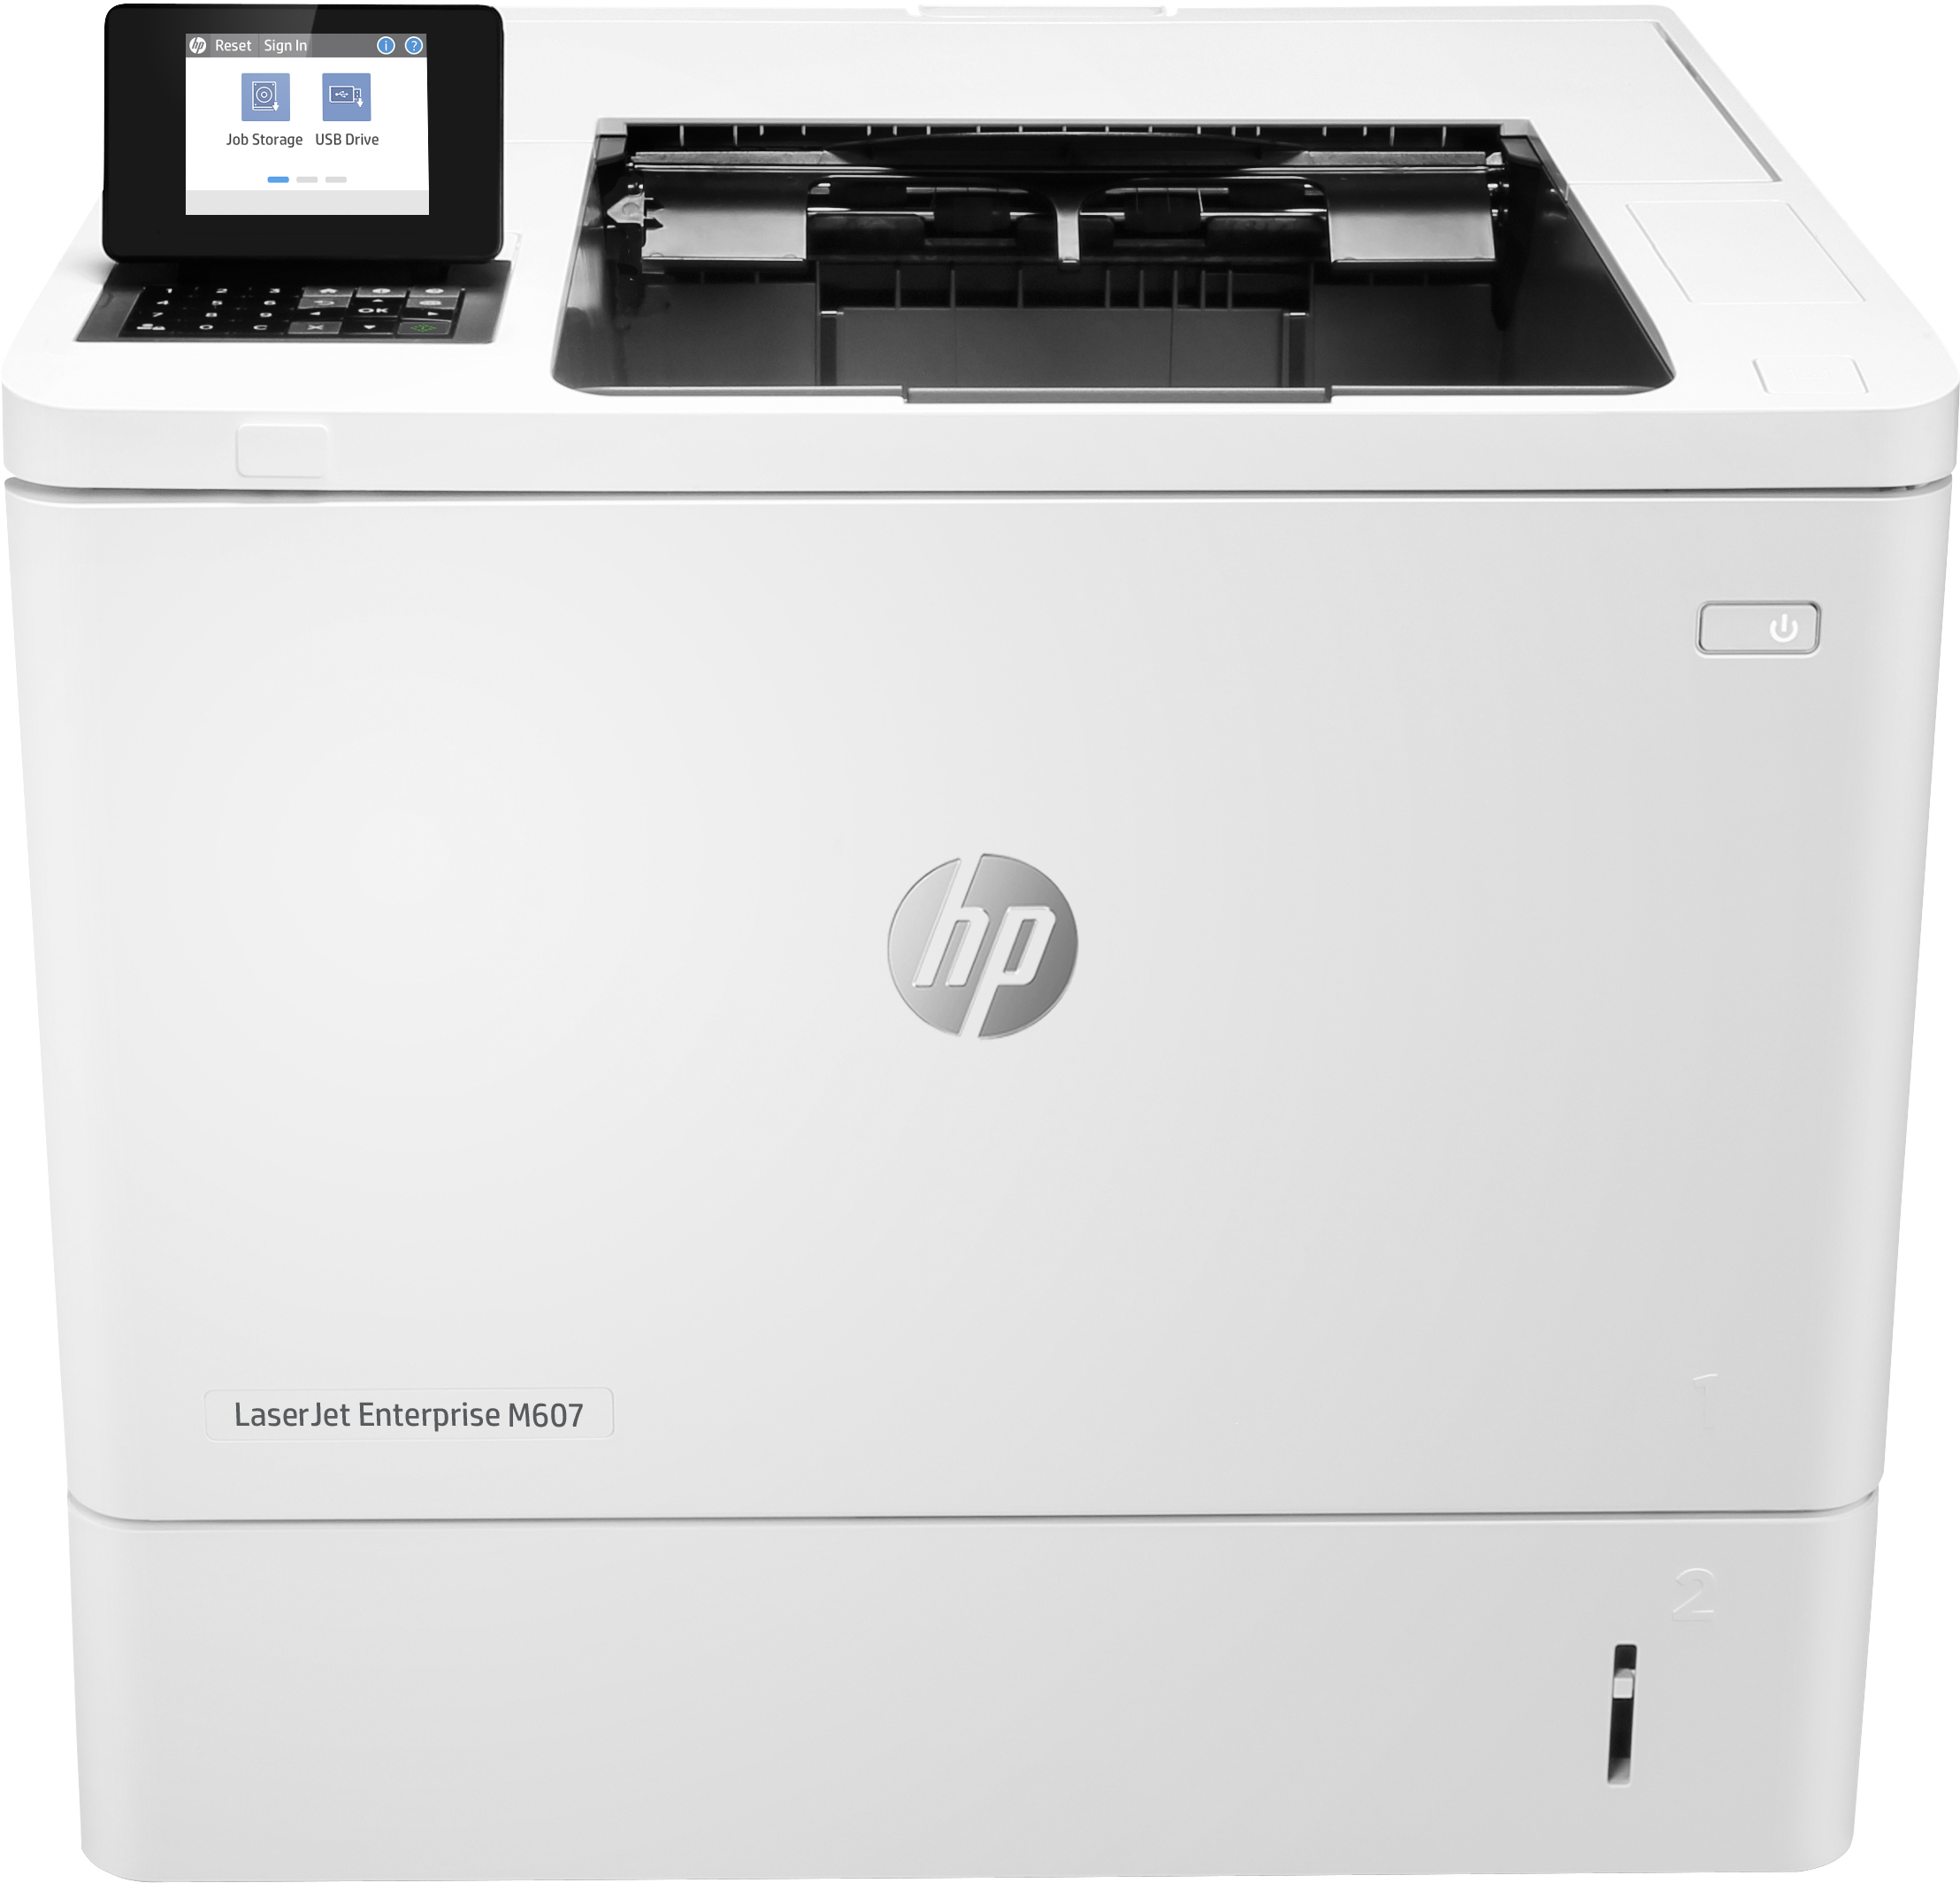 HP LaserJet Enterprise M607dn - Impressora - P/B - Duplex - laser - A4/Legal - 1200 x 1200 ppp - até 52 ppm - capacidade: 650 folhas - USB 2.0, Gigabit LAN, USB 2.0 host